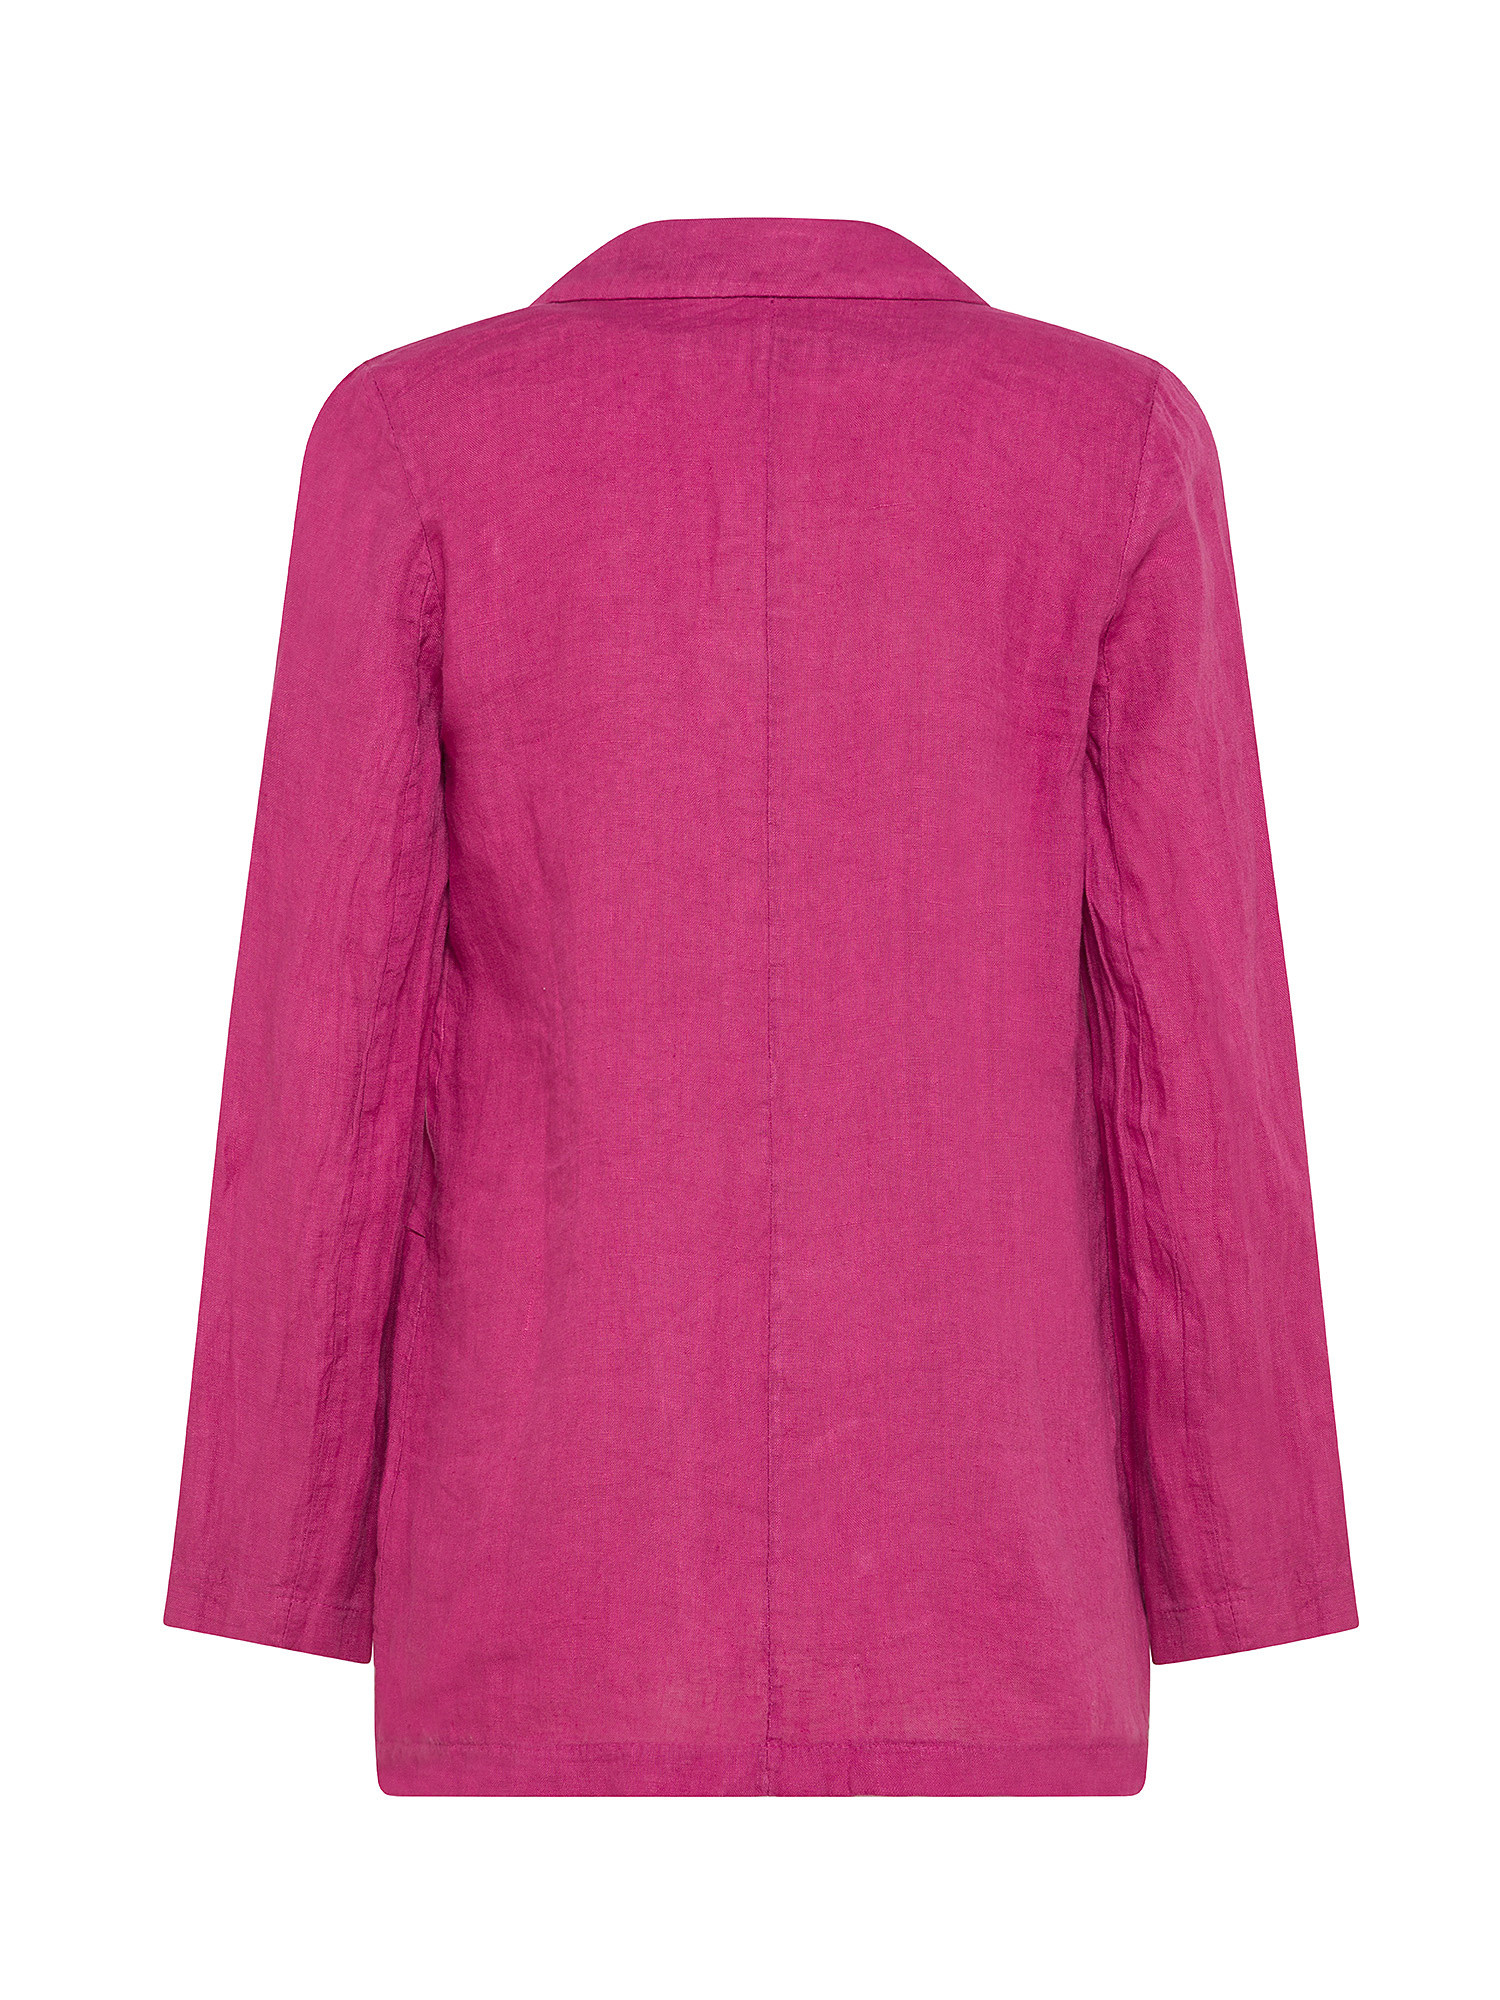 Koan - Classic linen jacket, Pink, large image number 1